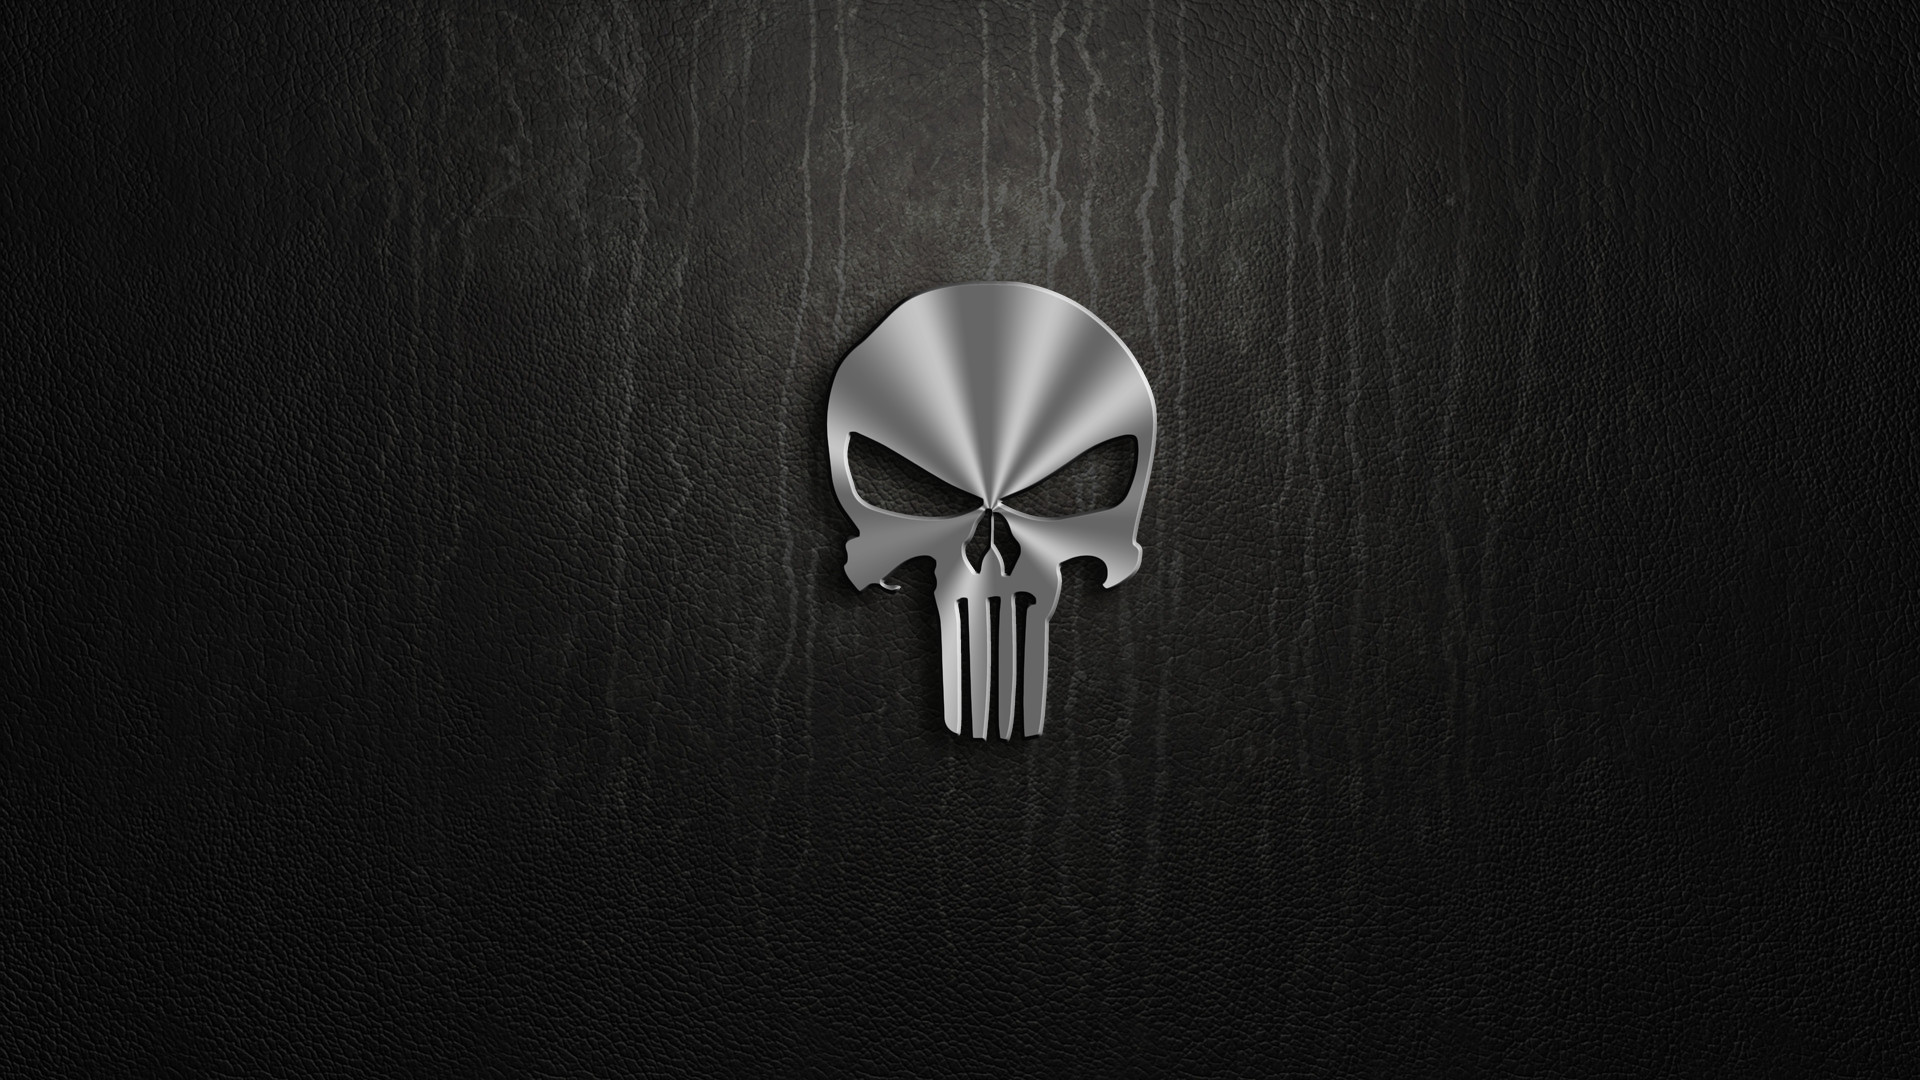 1920x1080 The Punisher Skull Logo HD Wallpapers | The Punisher | Pinterest .